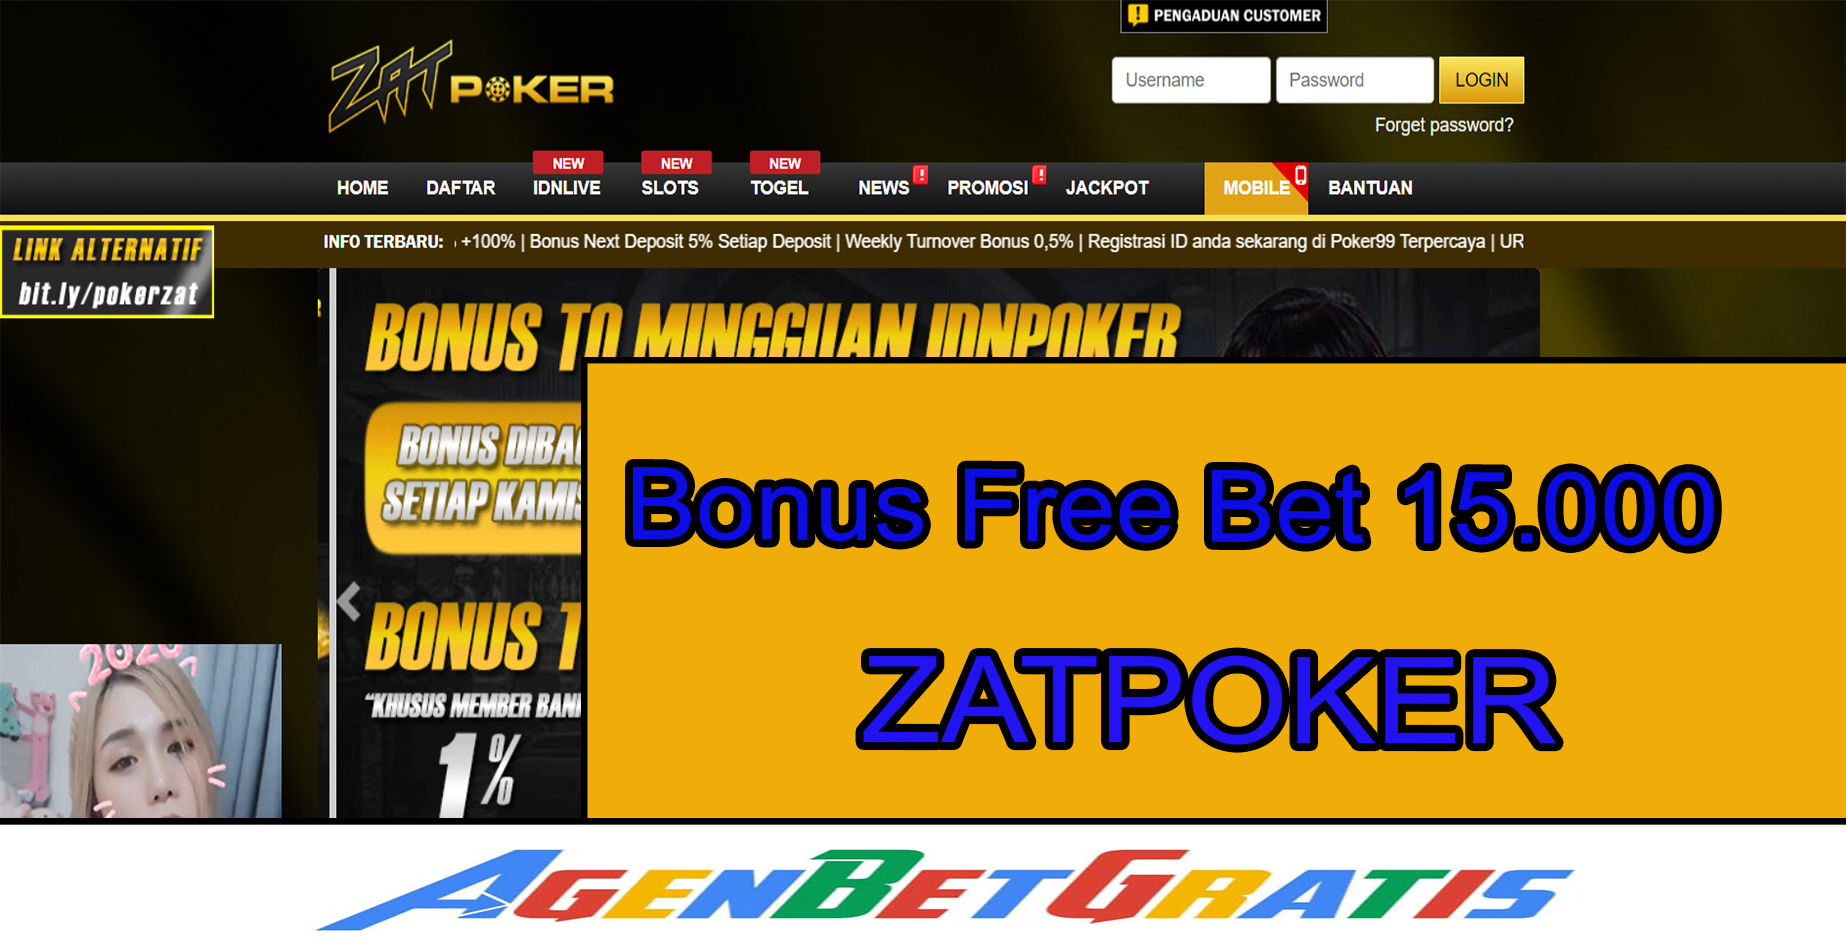 ZATPOKER - Bonus FreeBet 15.000